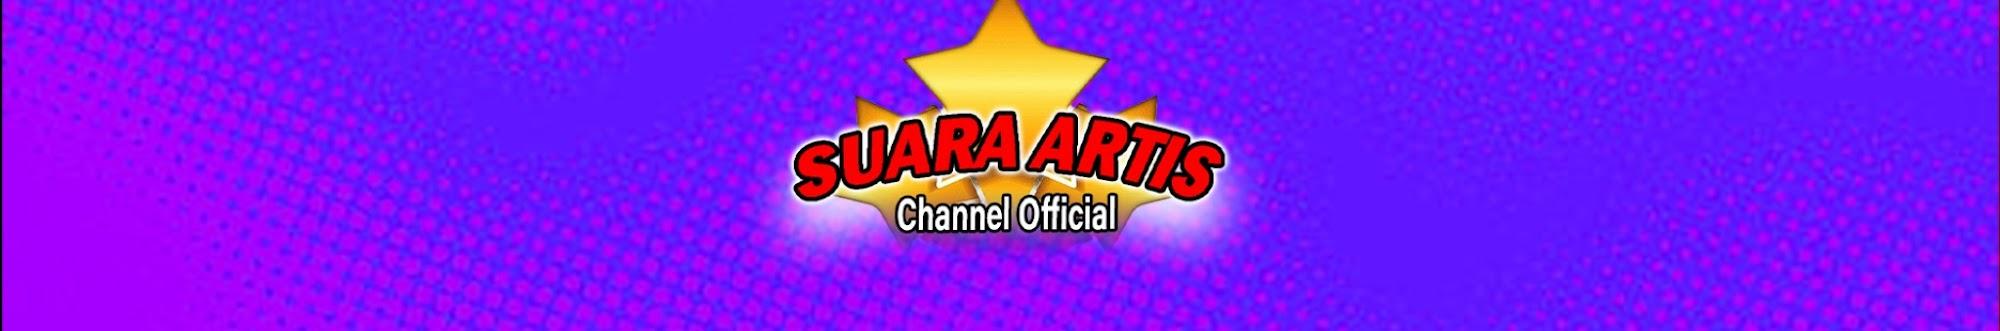 SUARA ARTIS Channel Official